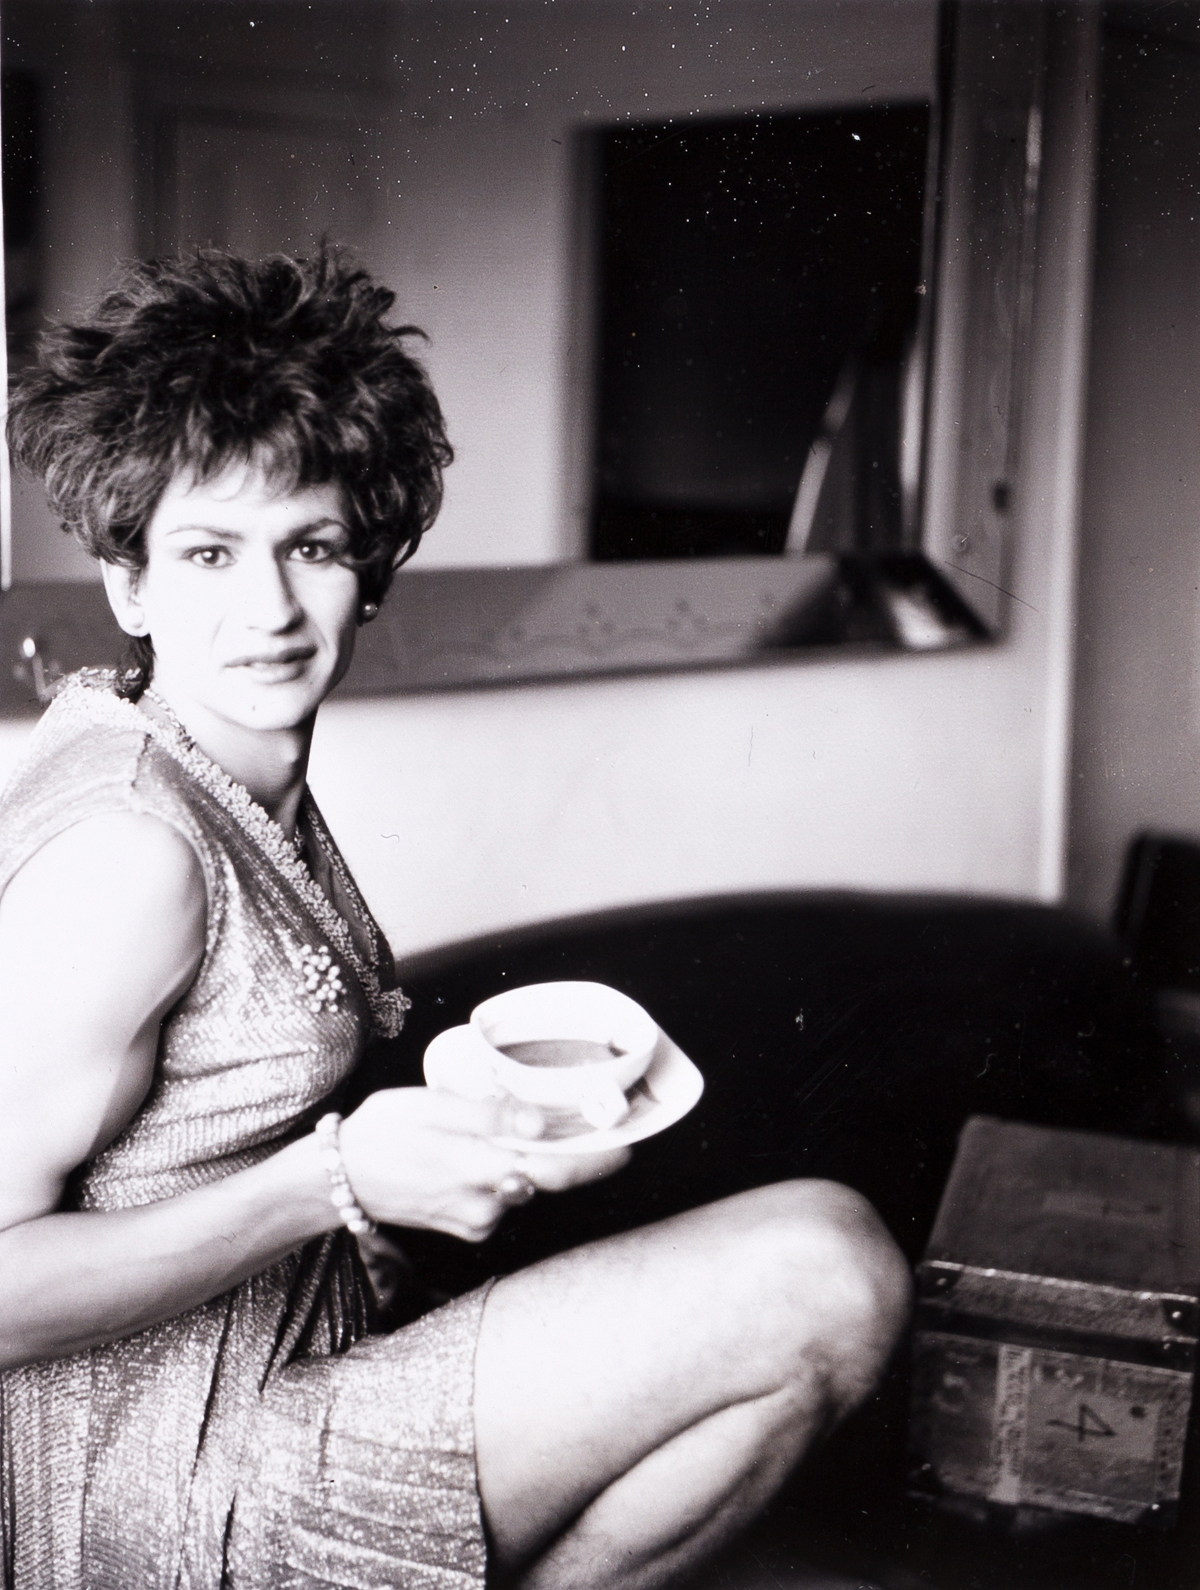 MARK MORRISROE (1959-1989) Self-portrait having tea.